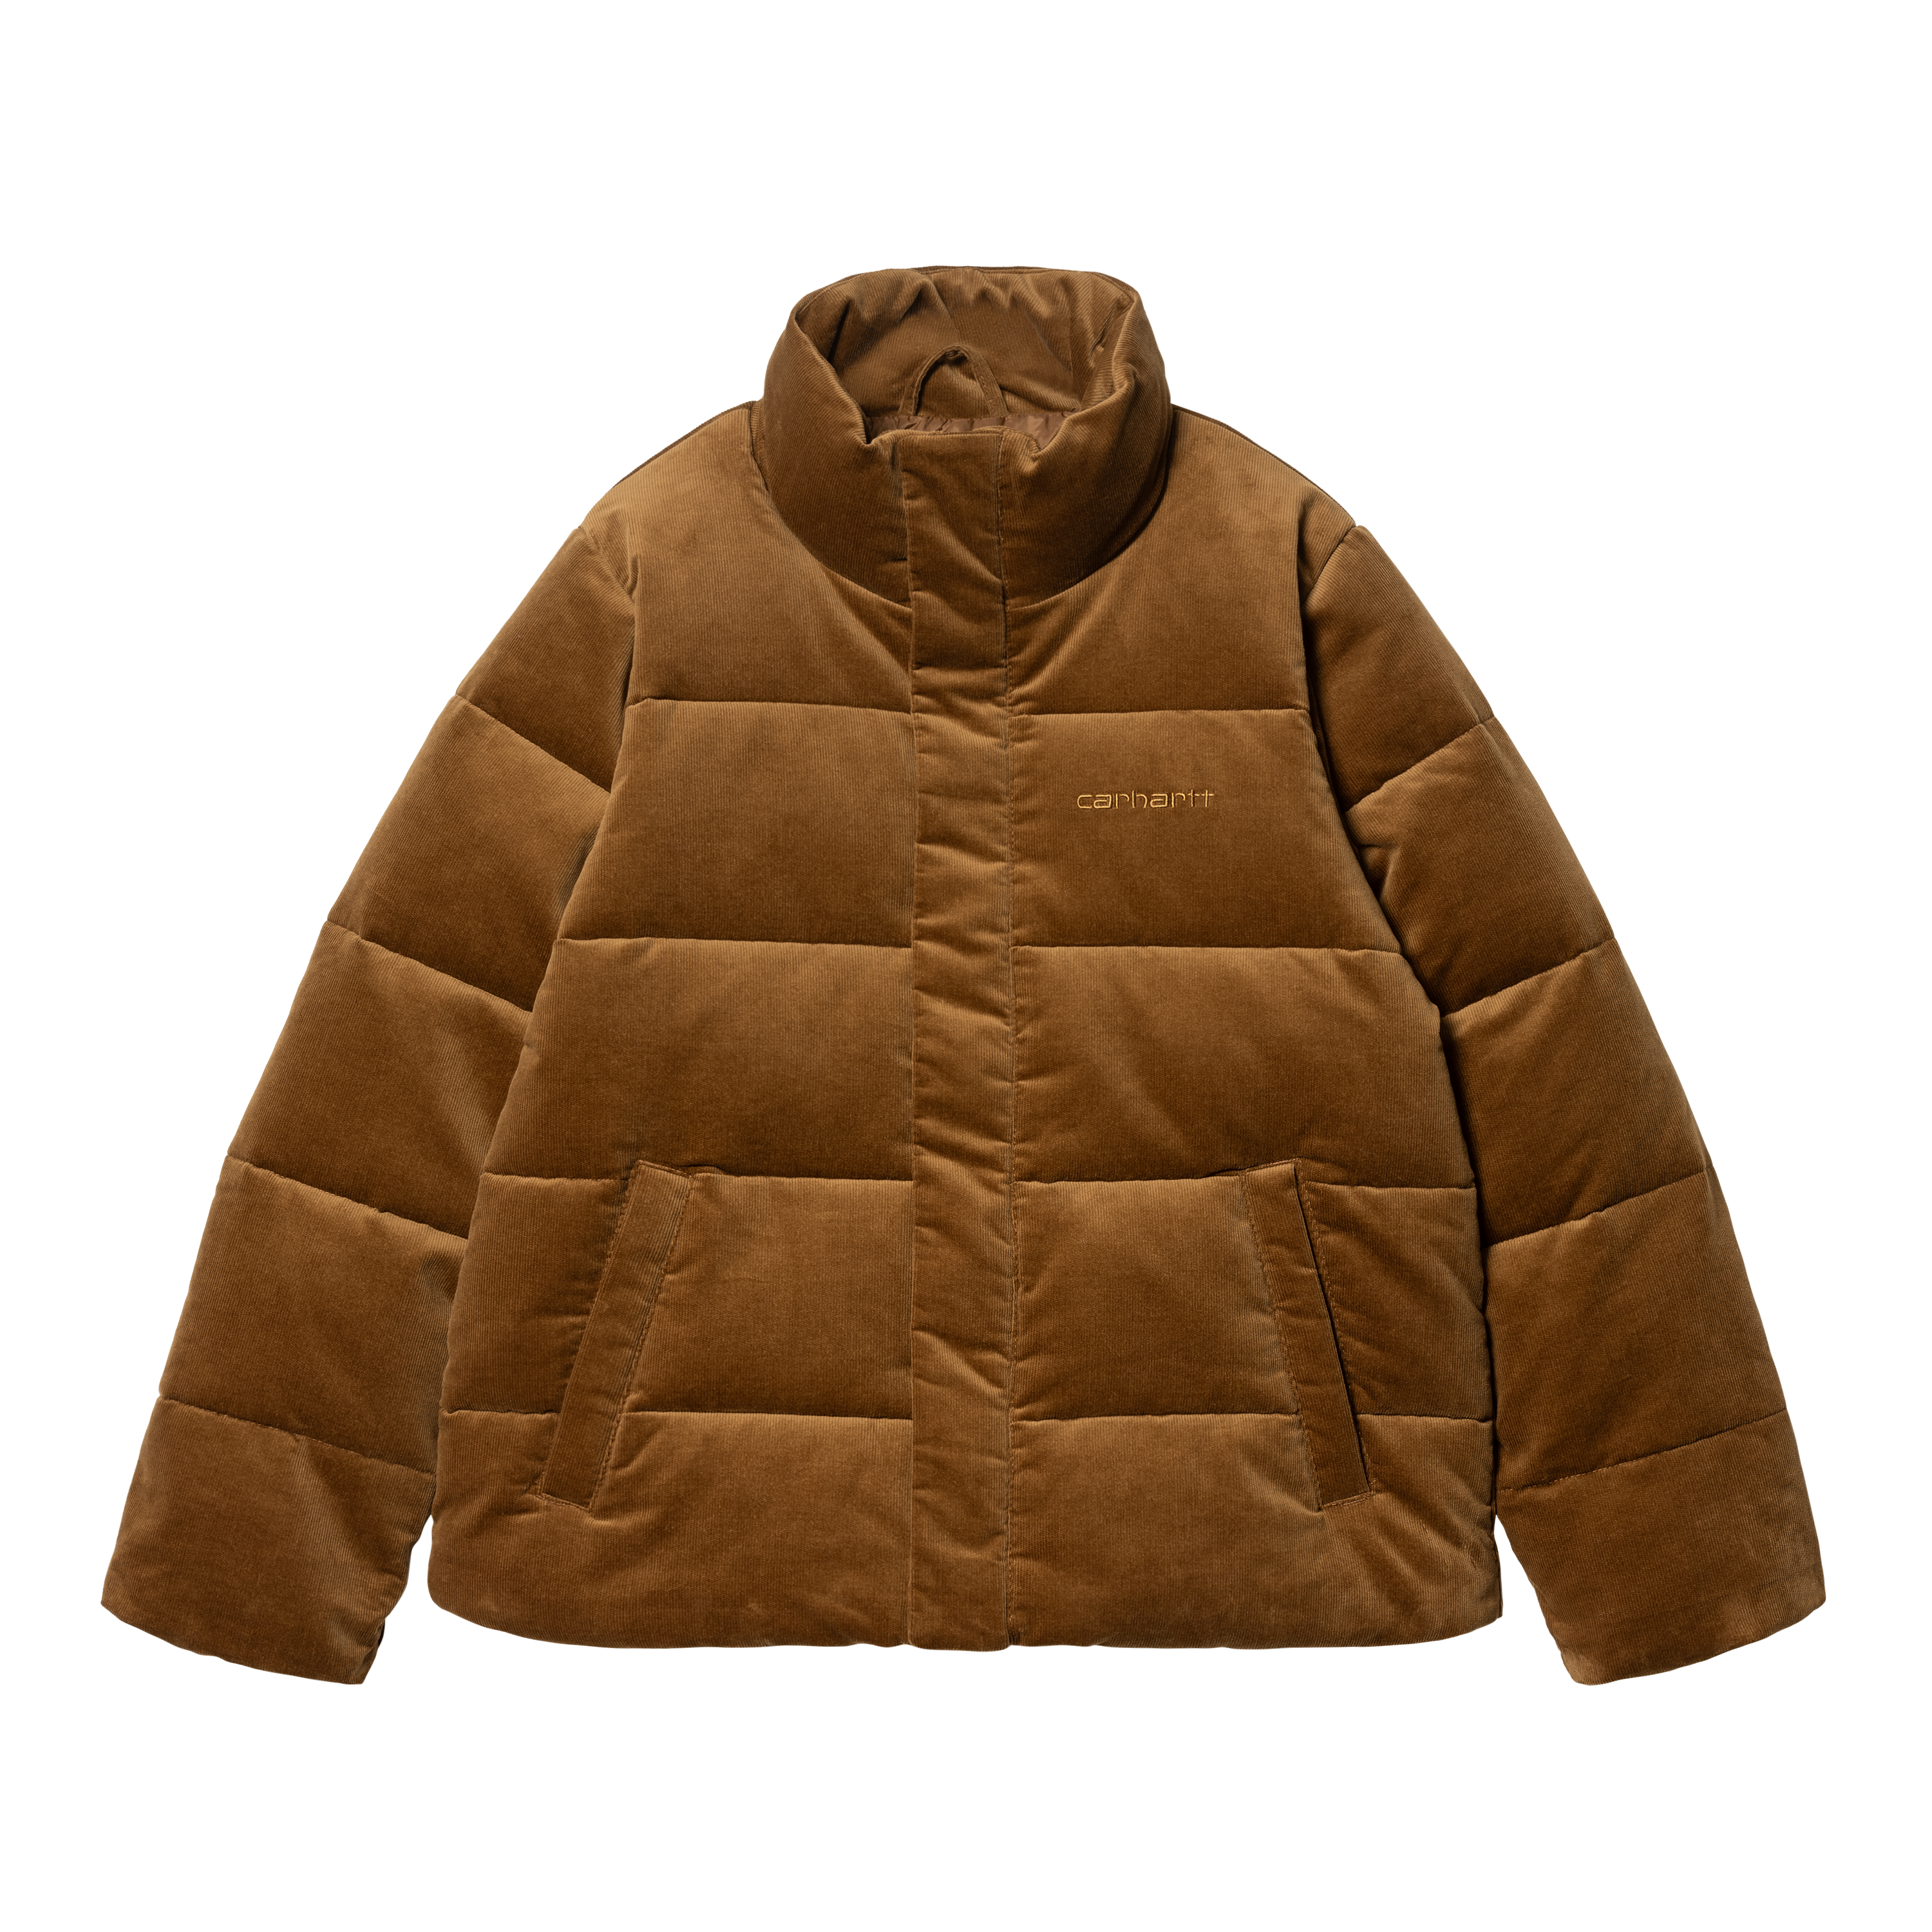 Carhartt WIP Women’s Layton jacket in Brown